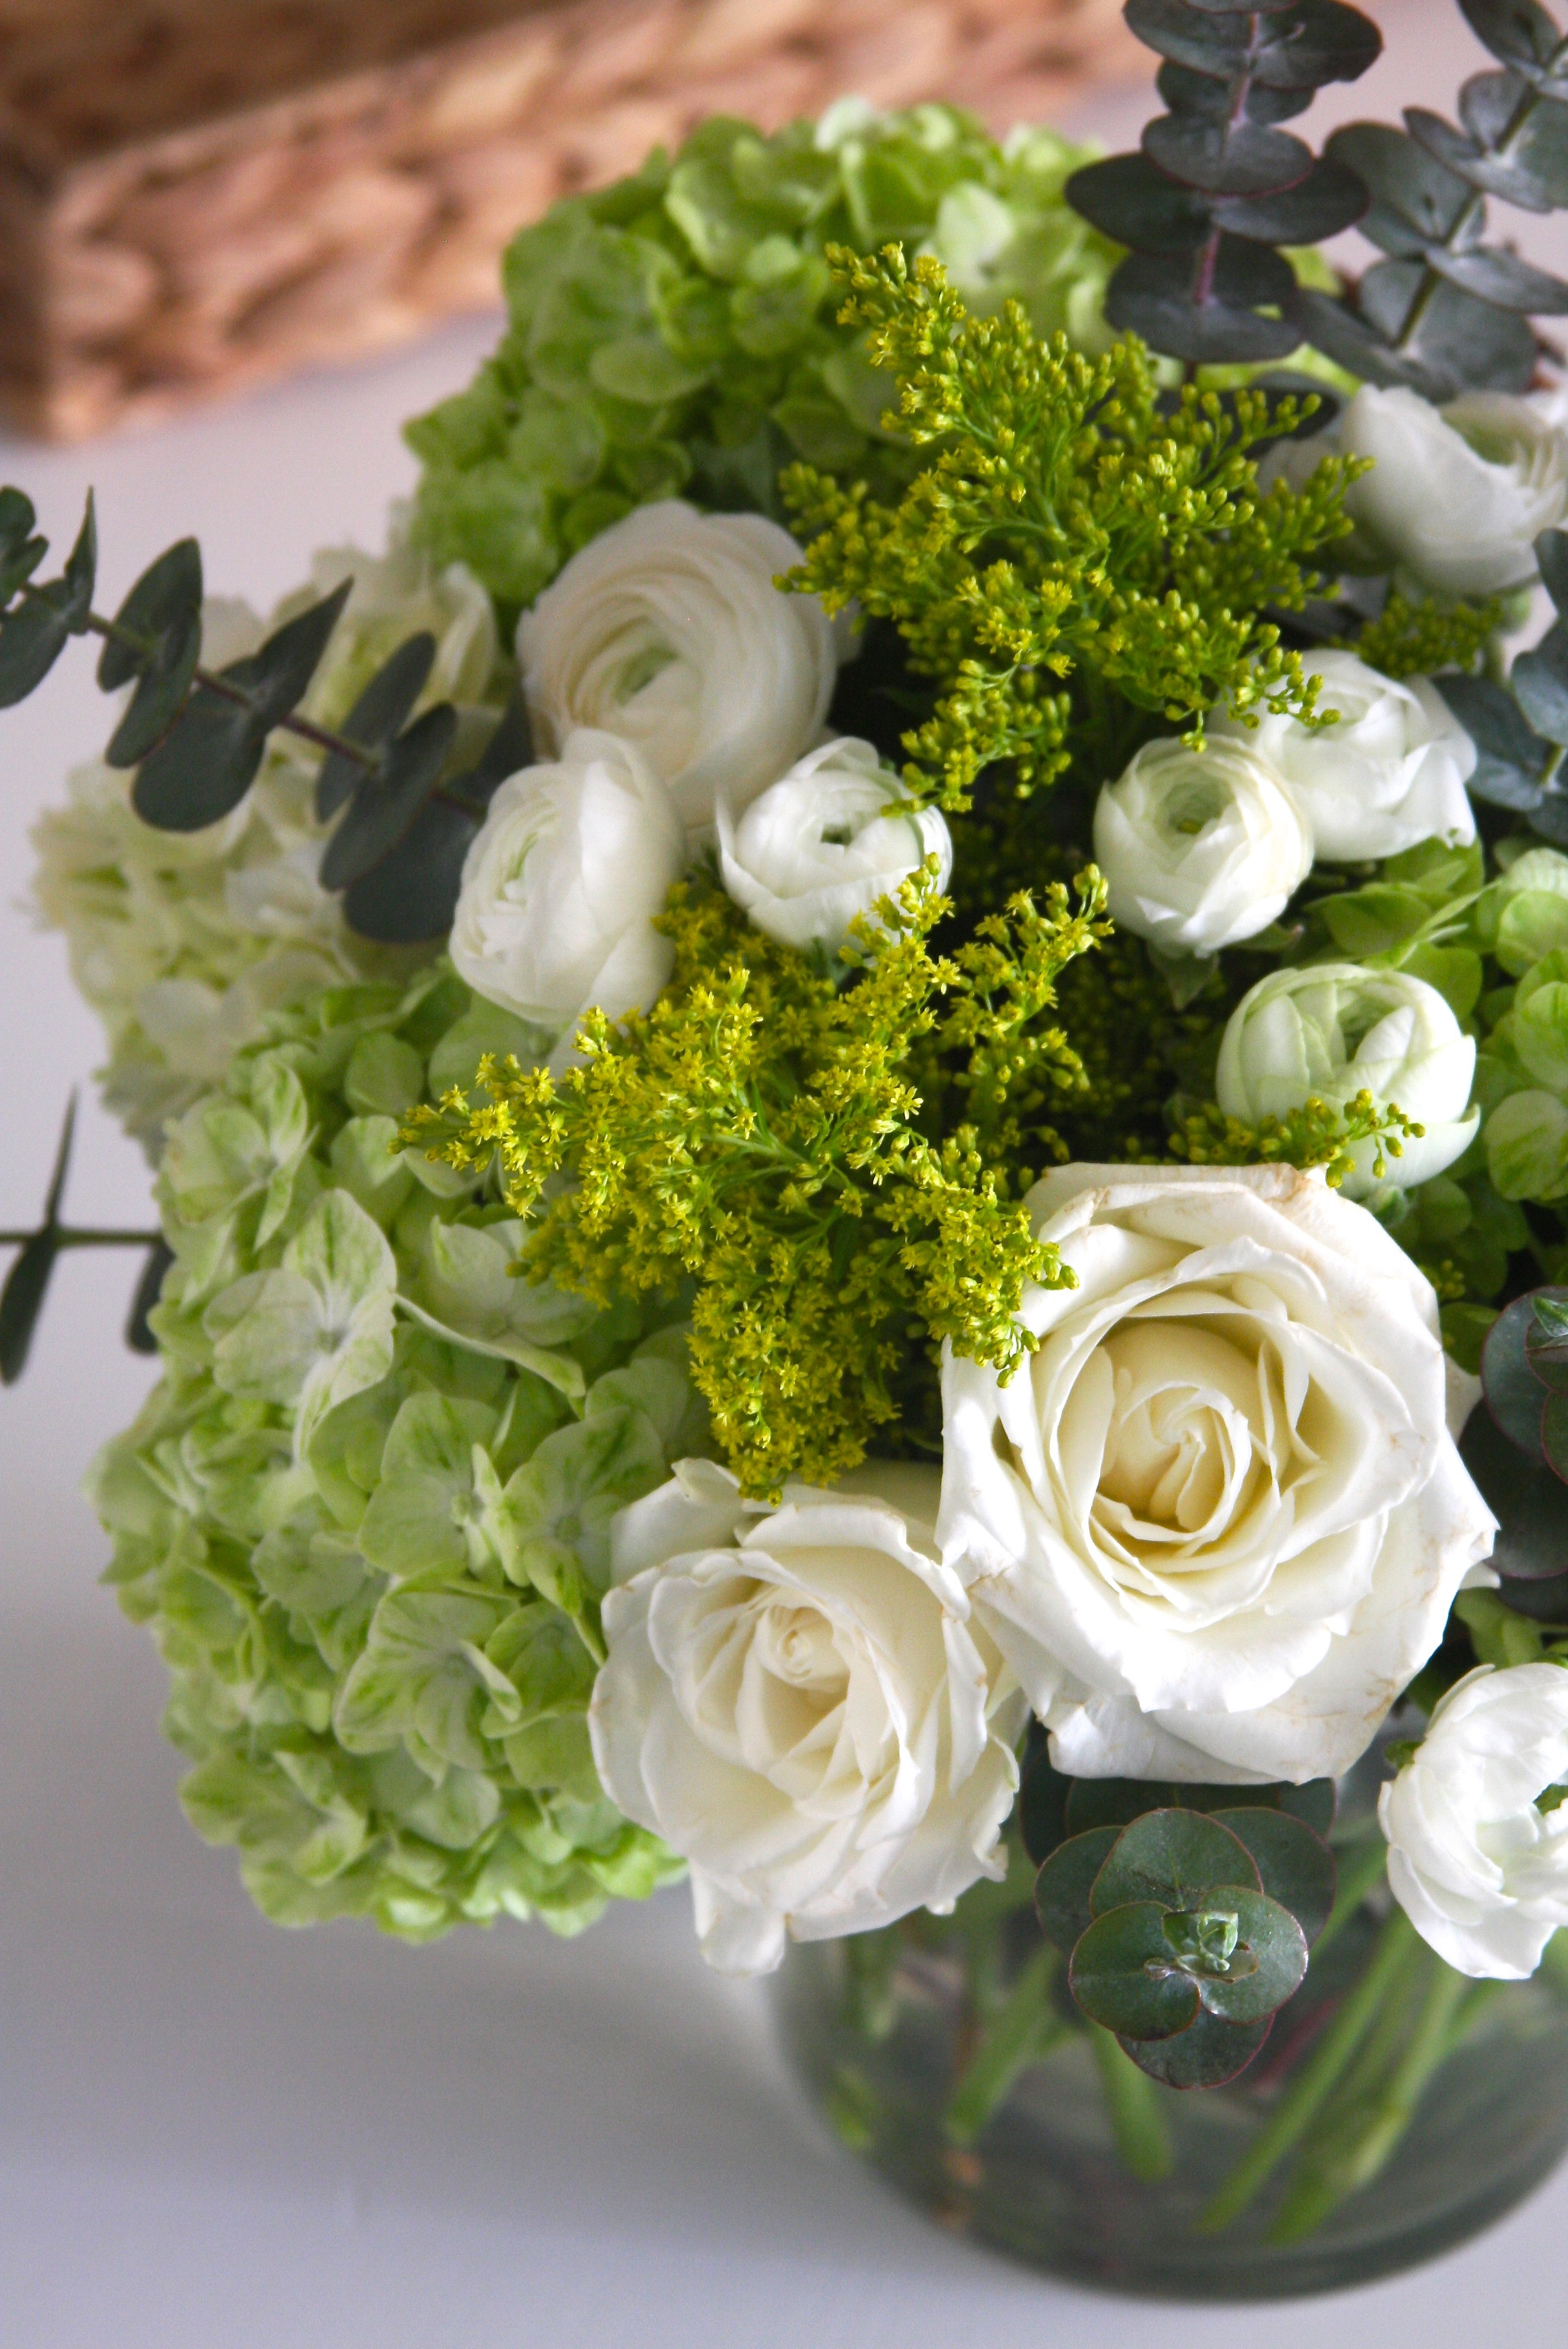 Best ideas about DIY Flower Arranging
. Save or Pin Elegant DIY Flower Arrangement Now.